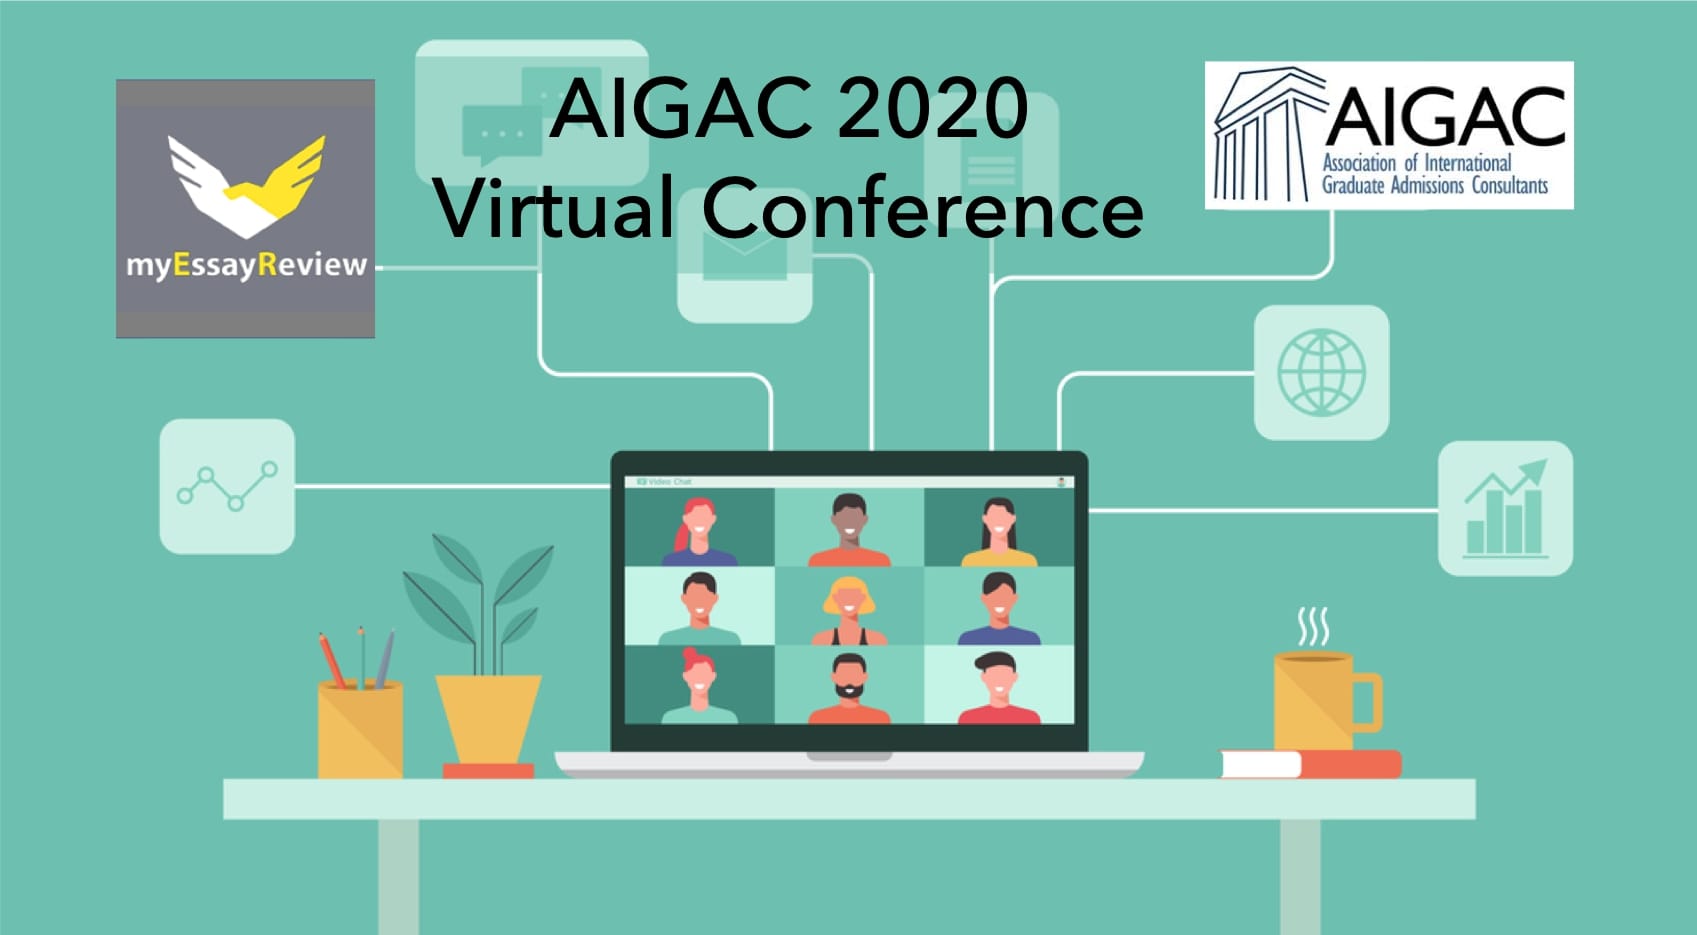 AIGAC virtual conference